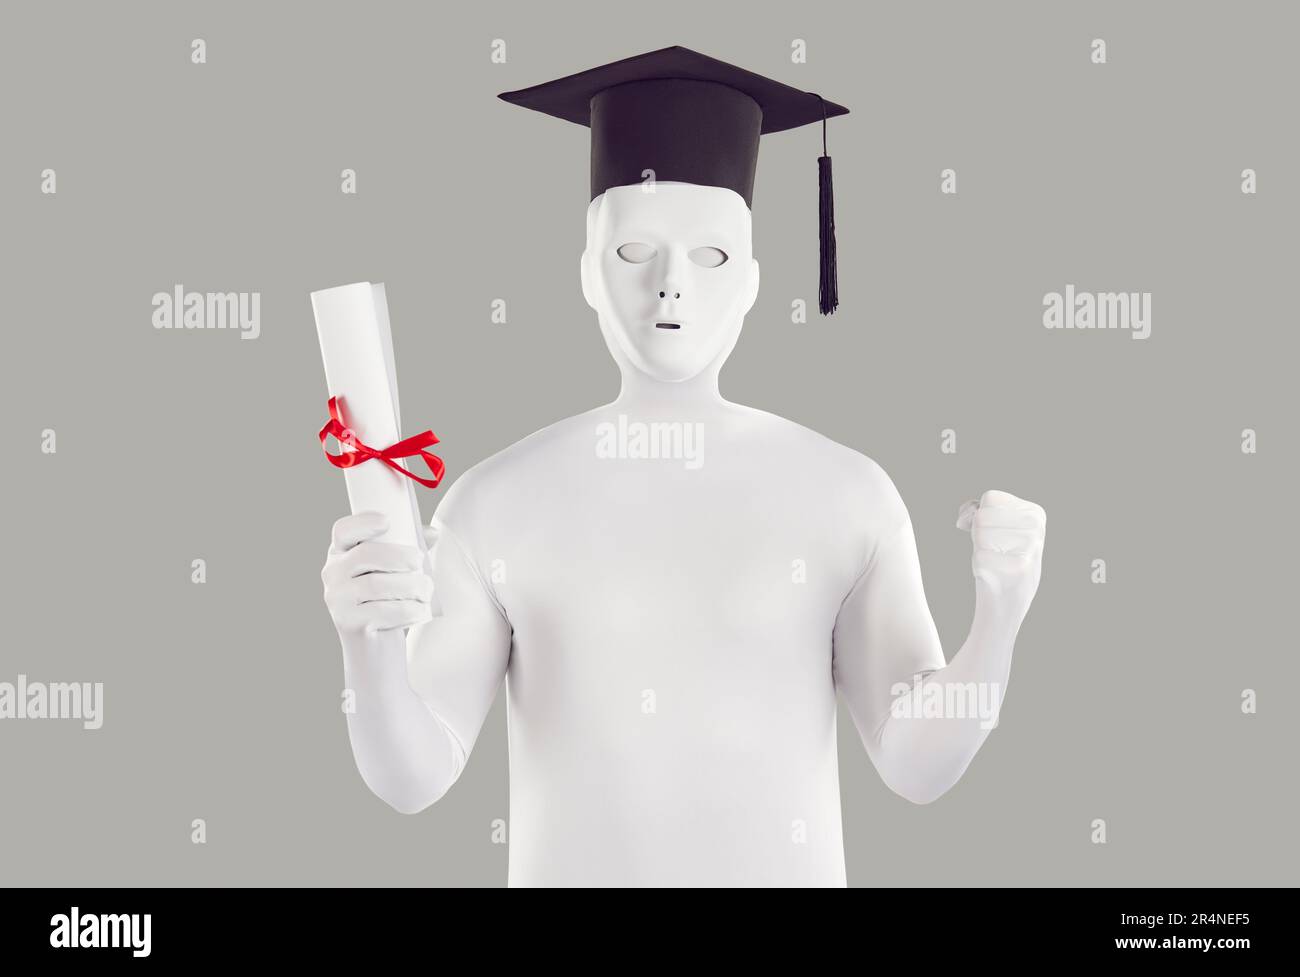 University student in white bodysuit, mask and academic cap celebrating graduation Stock Photo